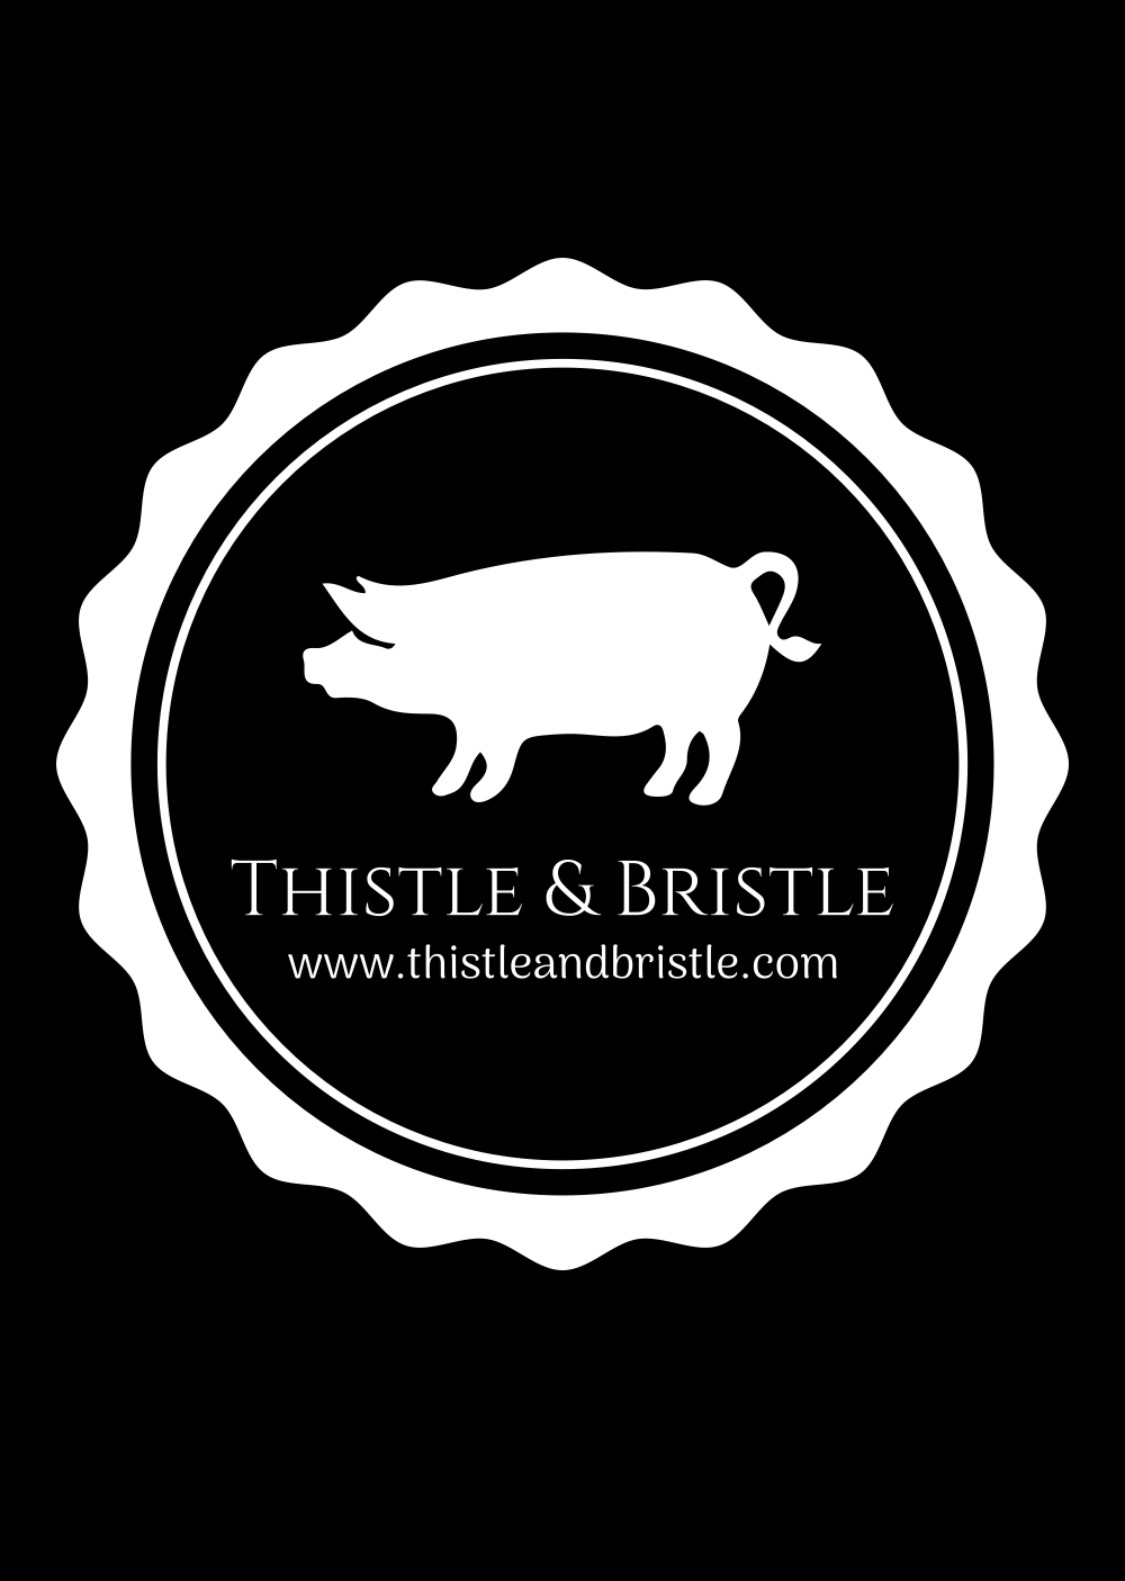 Thistle & Bristle's Image